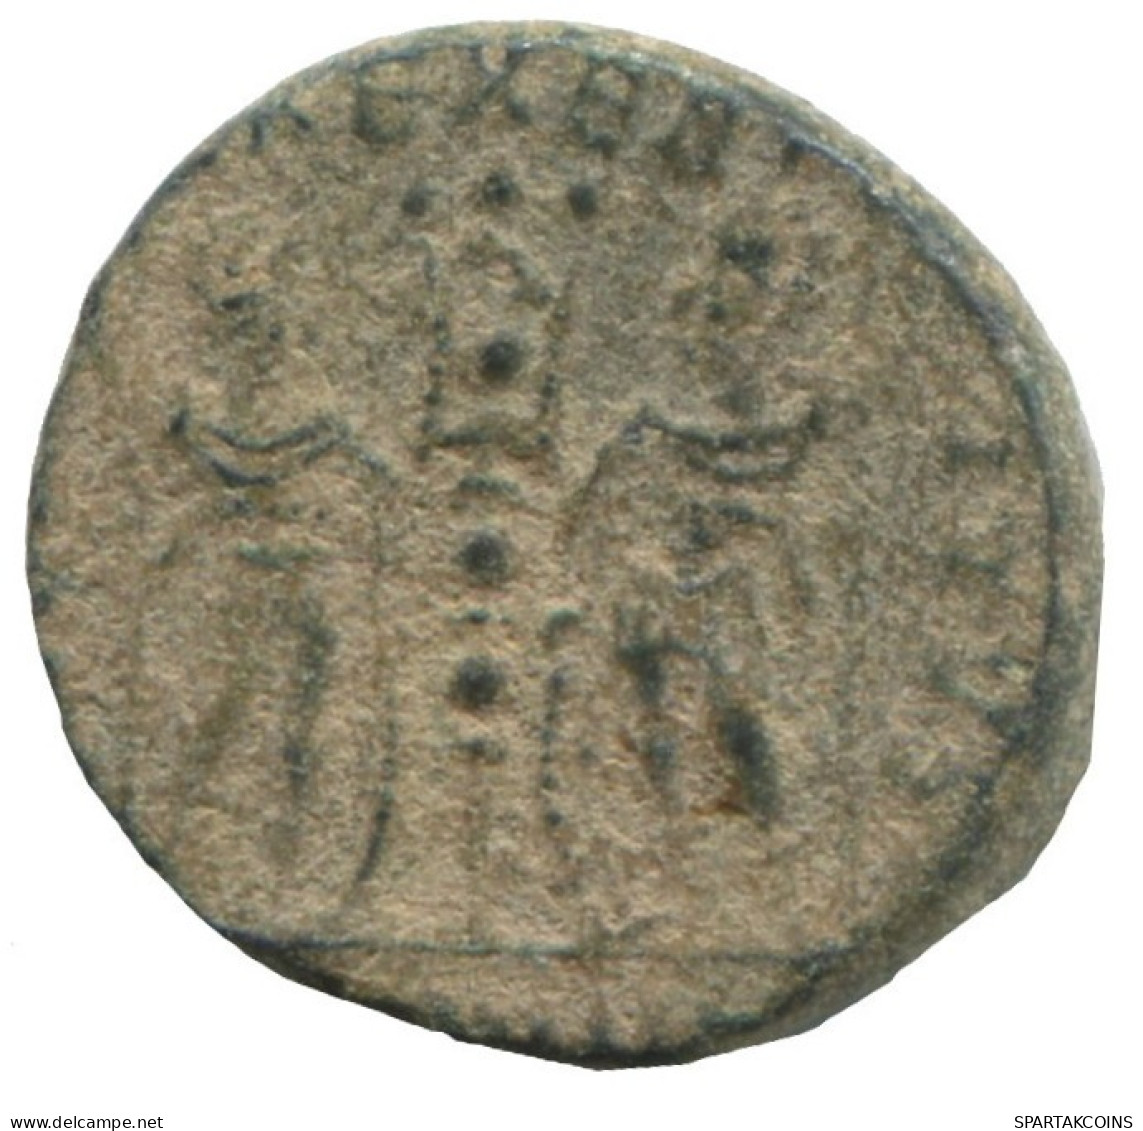 CONSTANS GLORIA EXERCITVS TWO SOLDIERS 2g/14mm RÖMISCHEN KAISERZEIT Münze #ANN1331.9.D.A - The Christian Empire (307 AD Tot 363 AD)